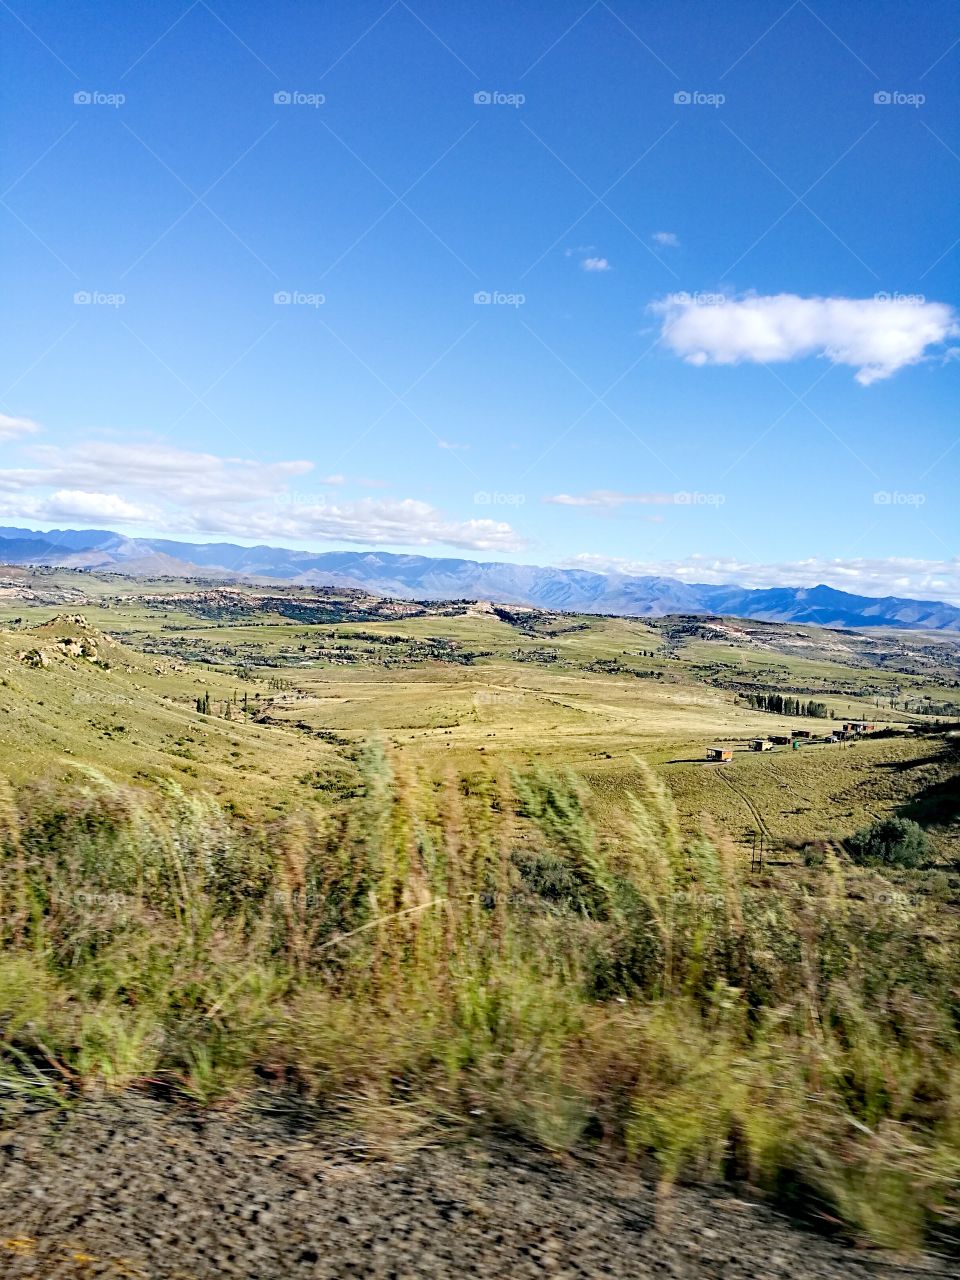 Lesotho Mountain range in distance